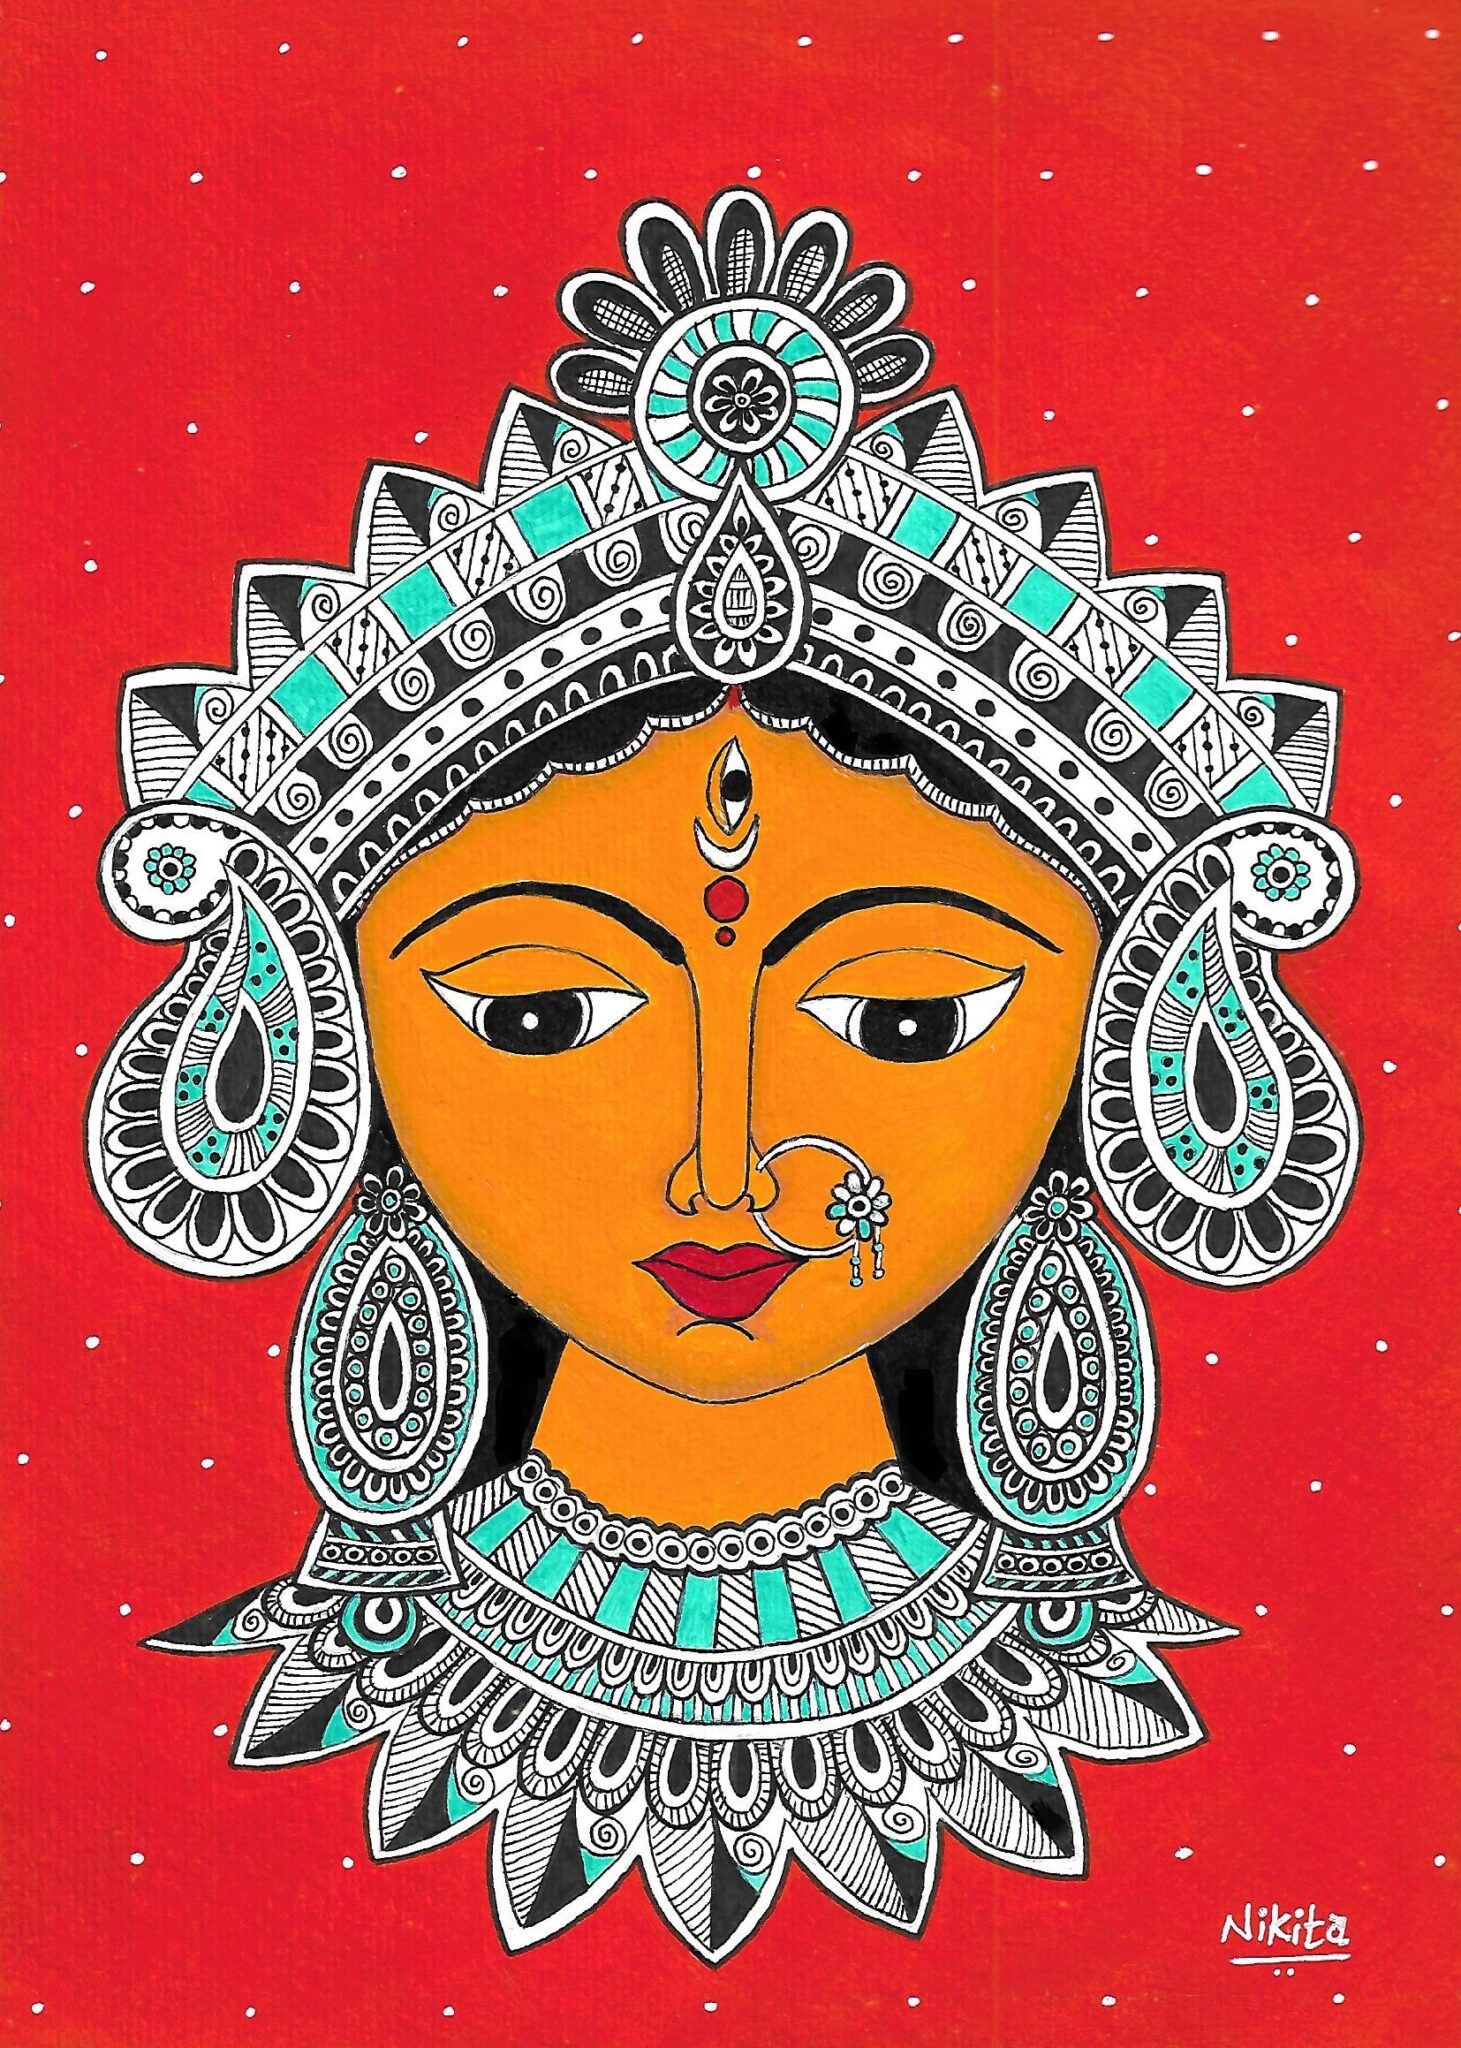 Maa Durga hidden within every woman Painting by Swastika Maiti